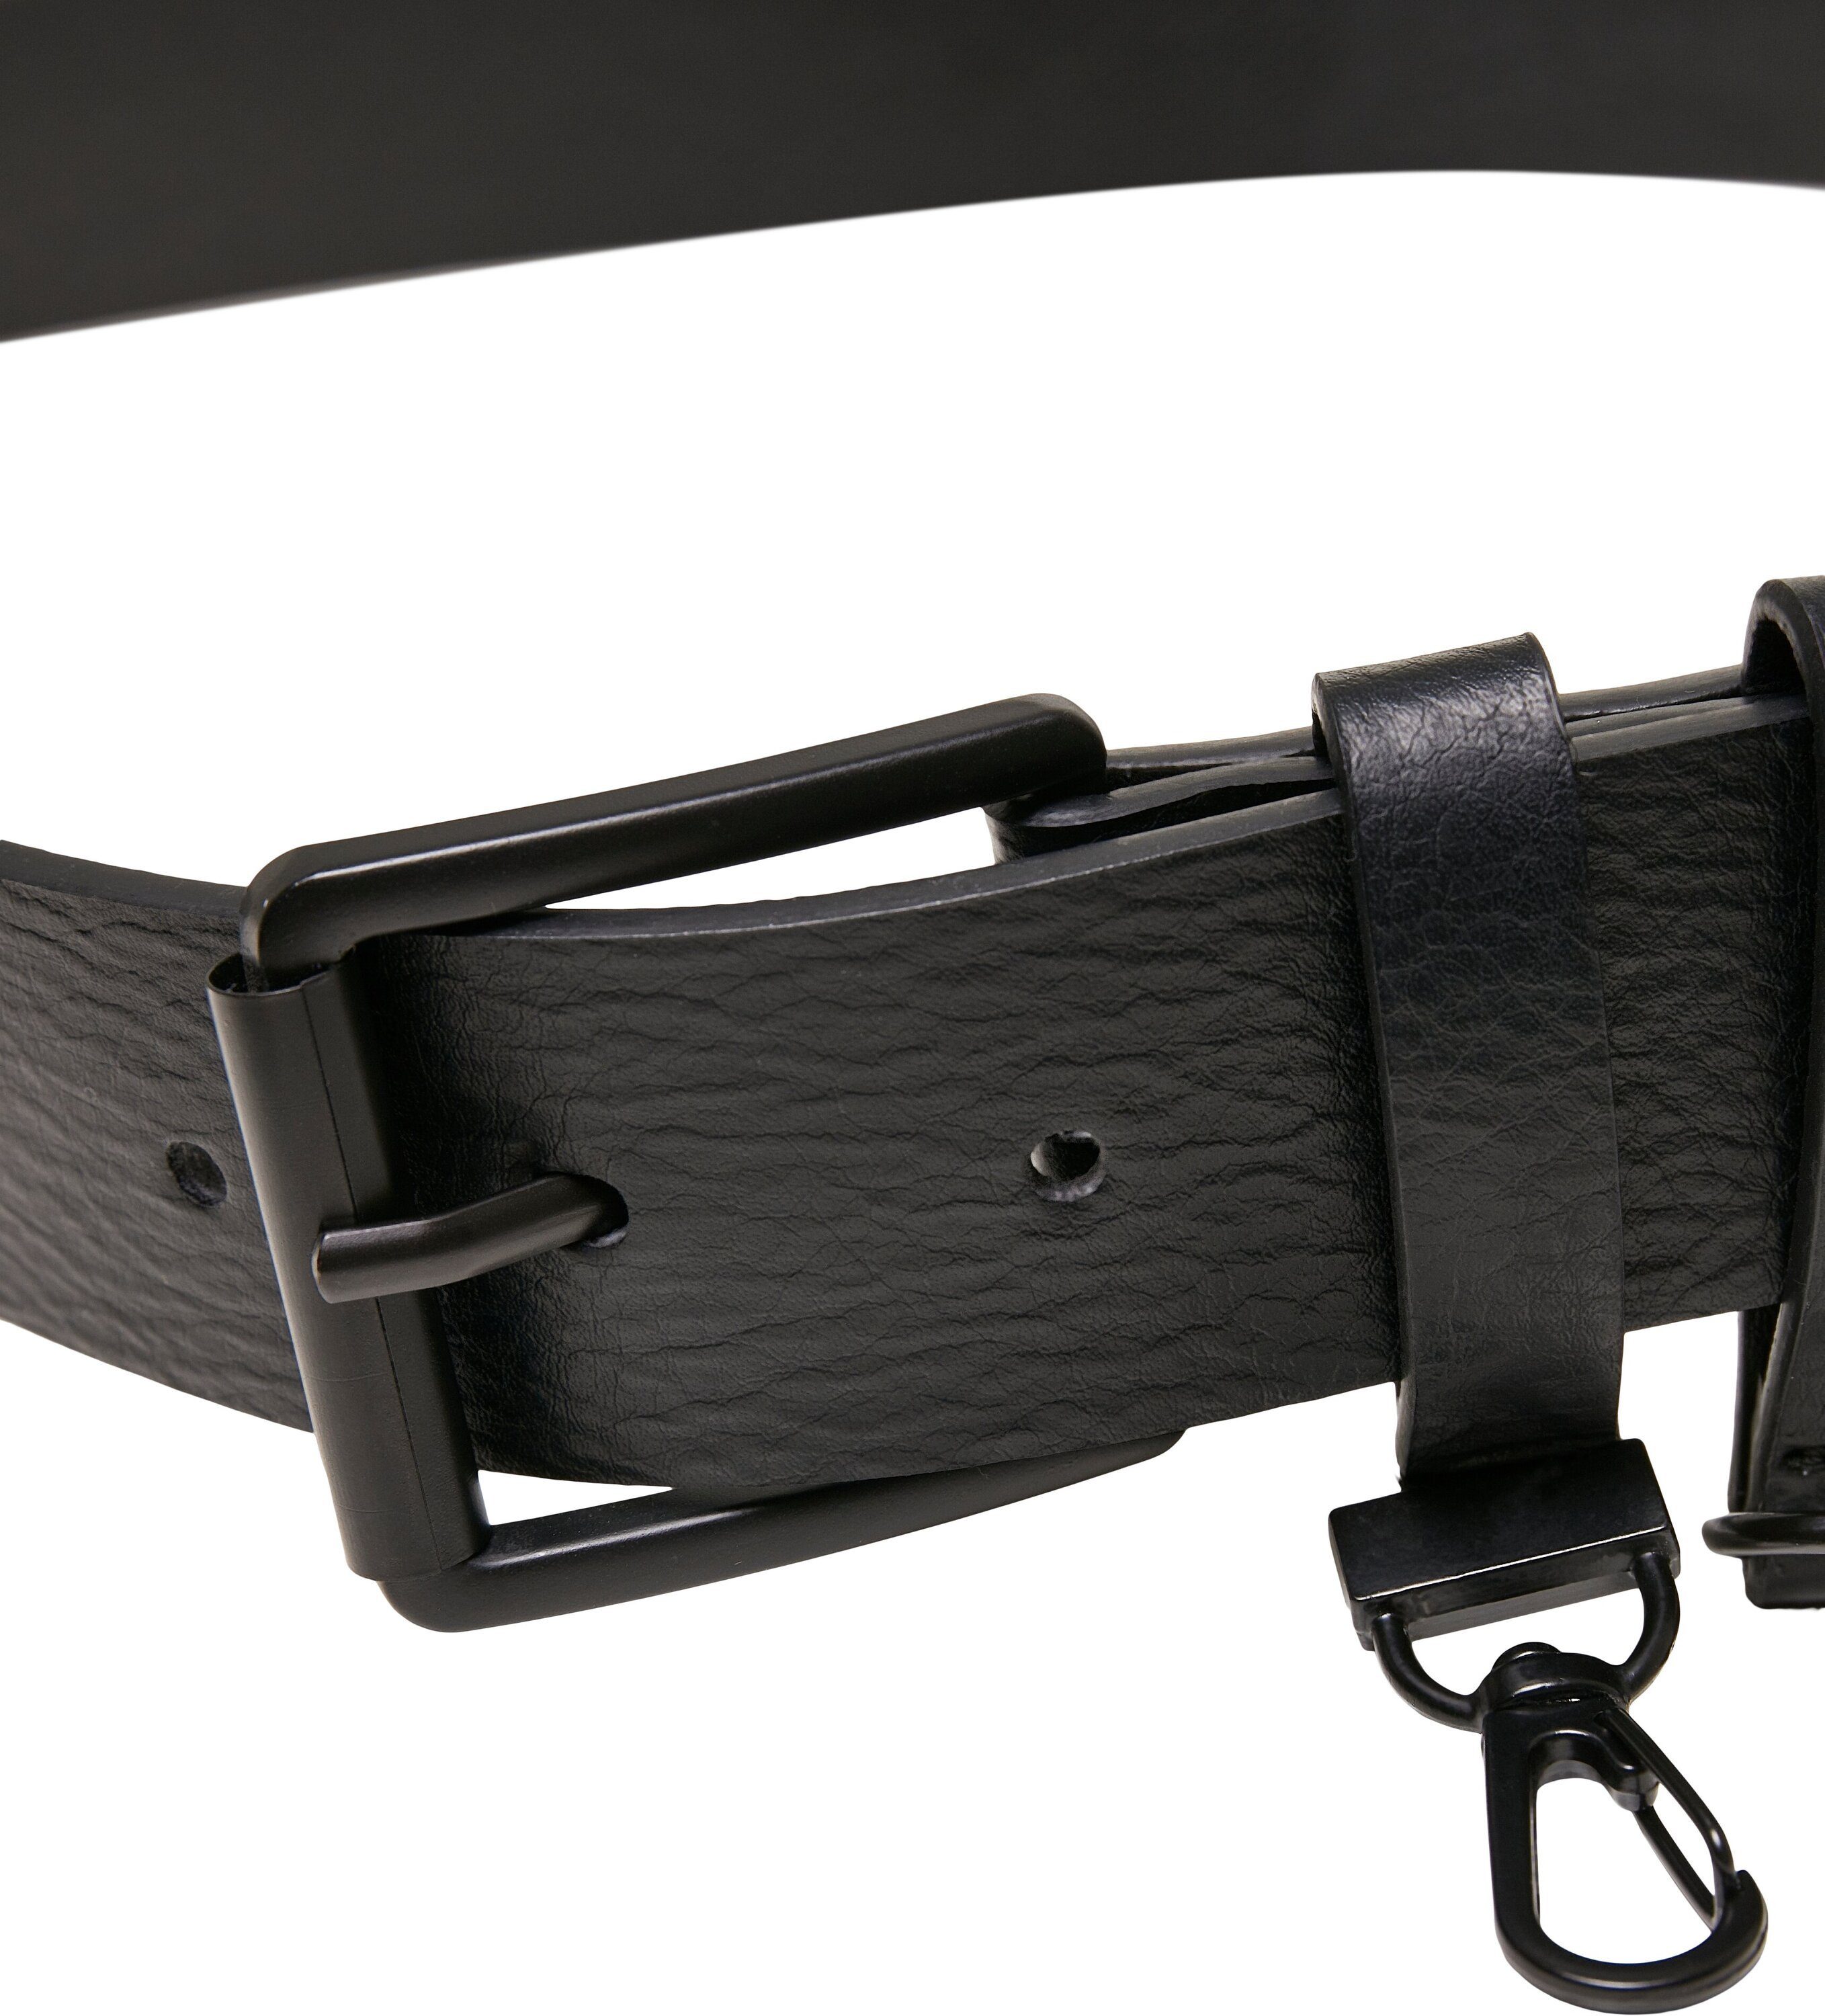 Imitation CLASSICS Belt Accessories Hüftgürtel Key URBAN With Leather Chain